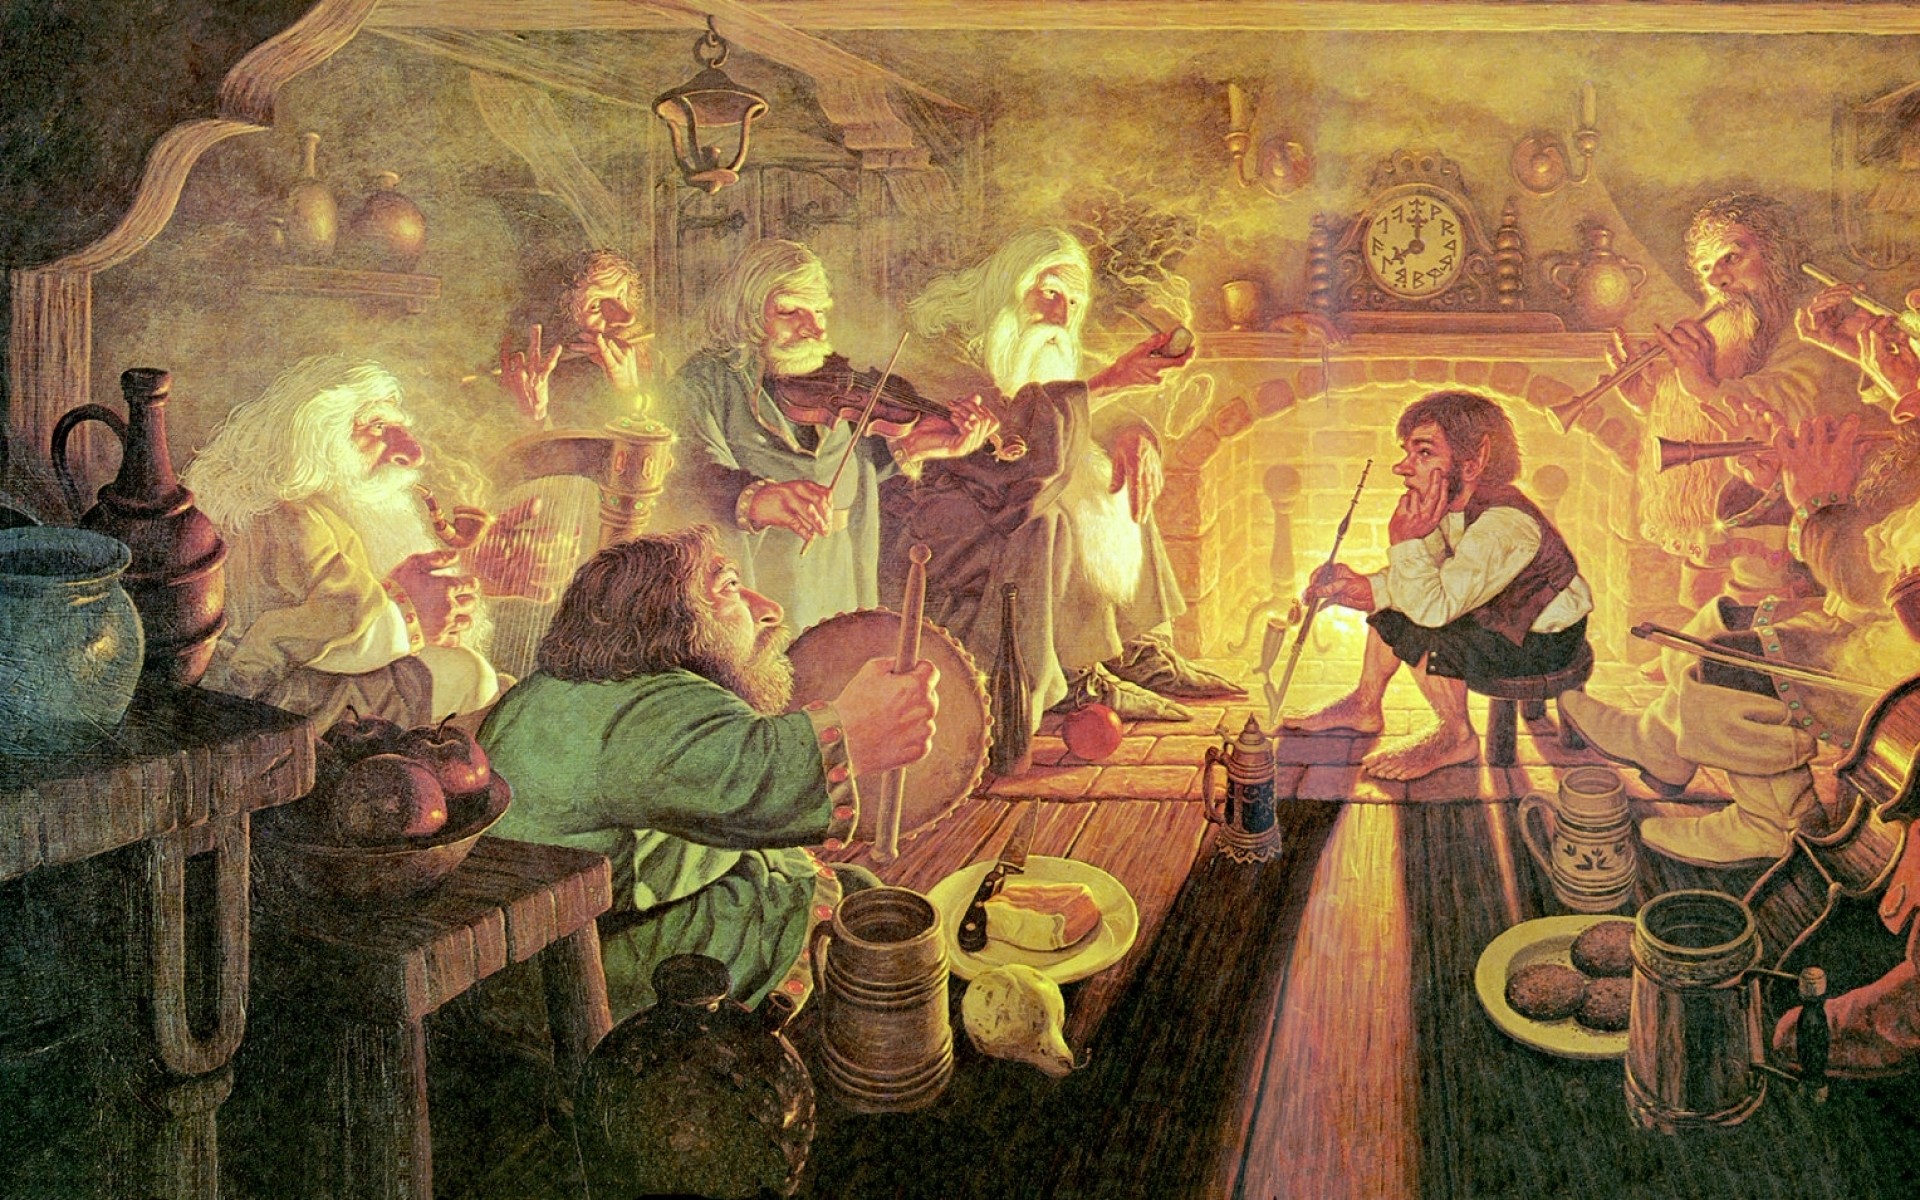 1920x1200 The Hobbit fantasy music gandalf the lord of the rings instructions fantasy  art fireplace bilbo baggins greg hildebrand wallpaper |  | 47985 |  ...